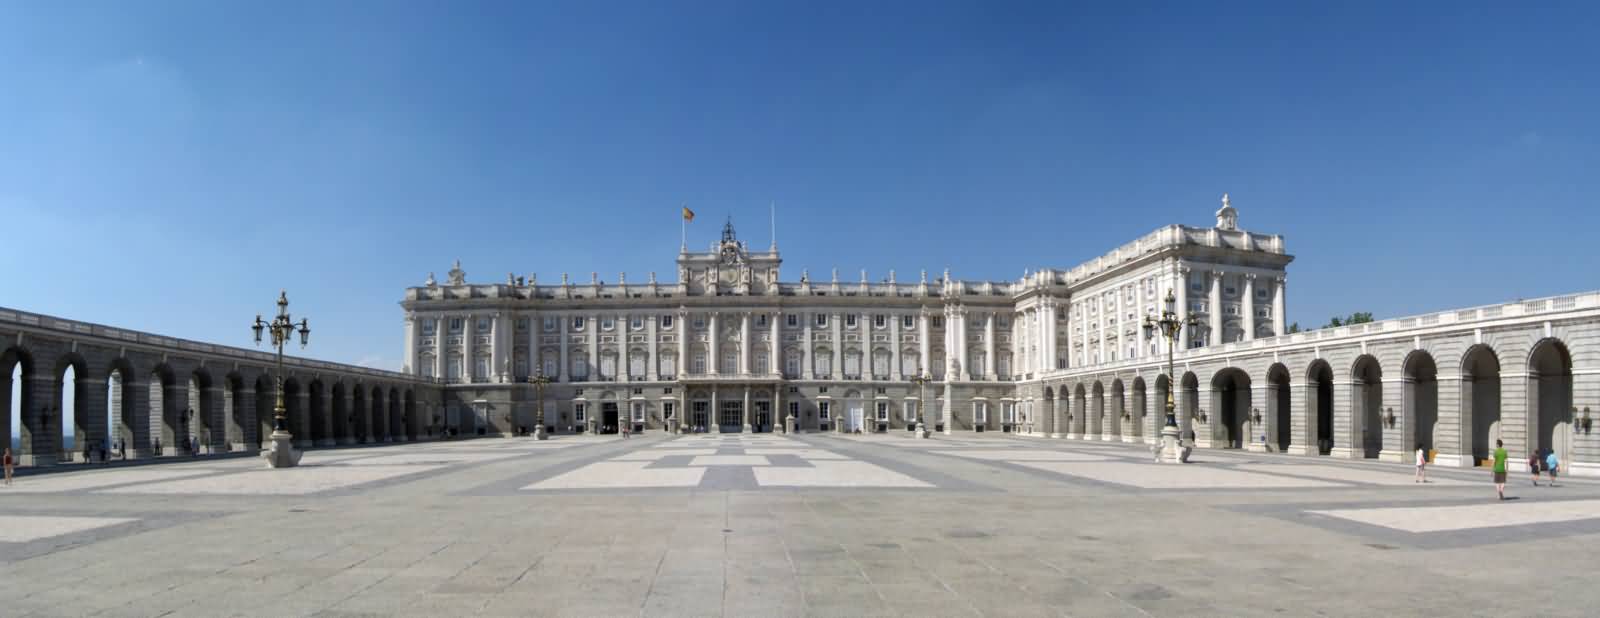 Panaroma View Of The Royal Palace Of Madrid Facade